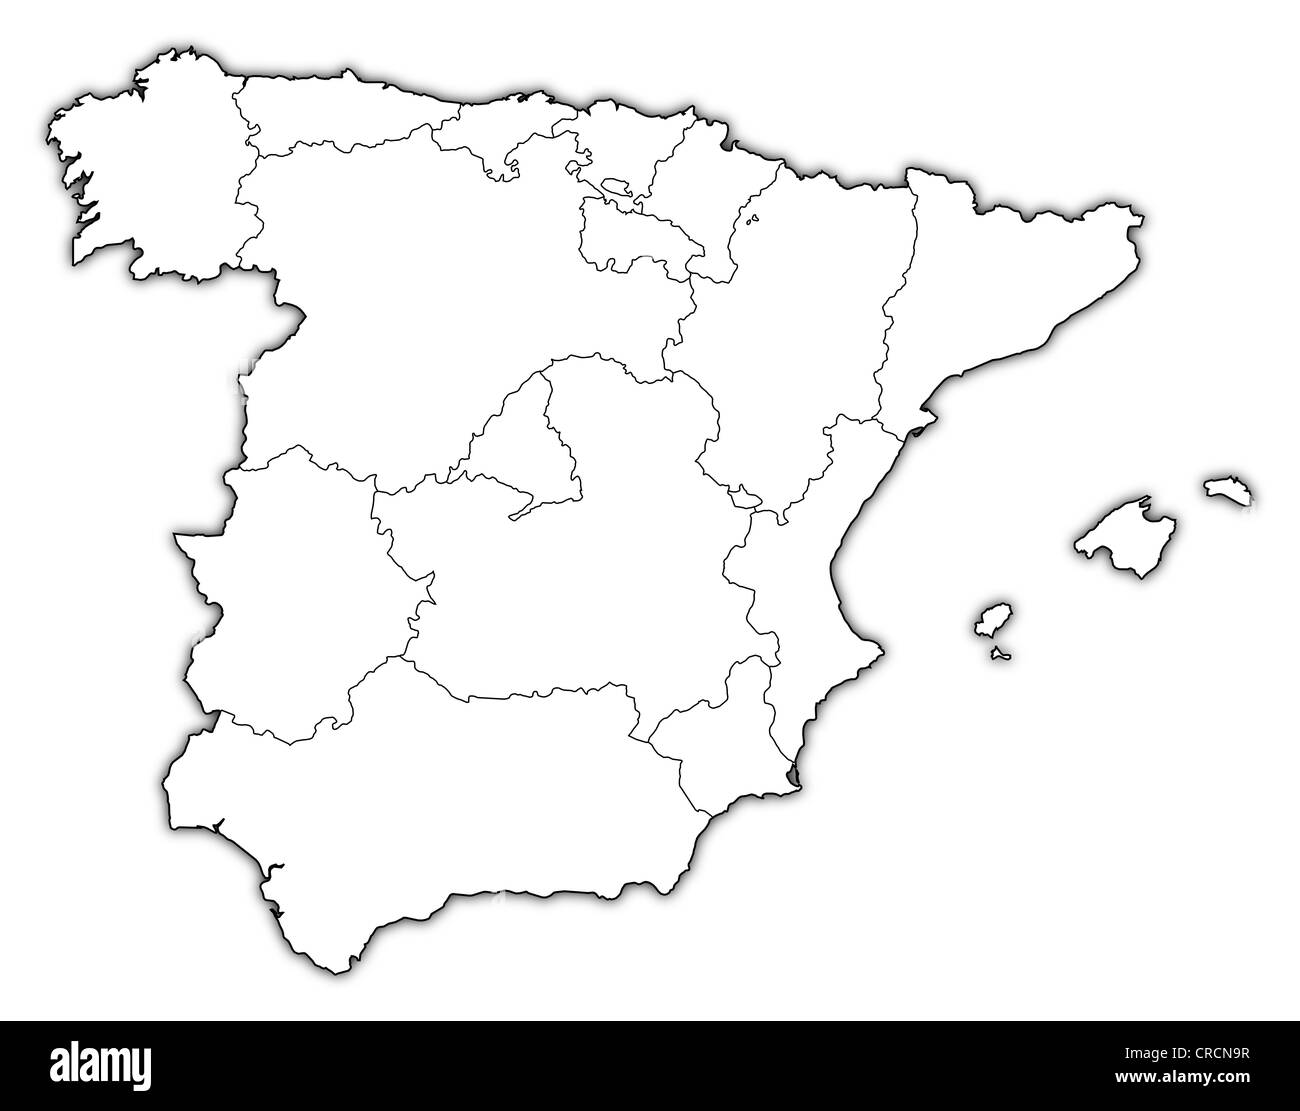 File:Mapa municipal de España y Portugal.png - Wikimedia Commons